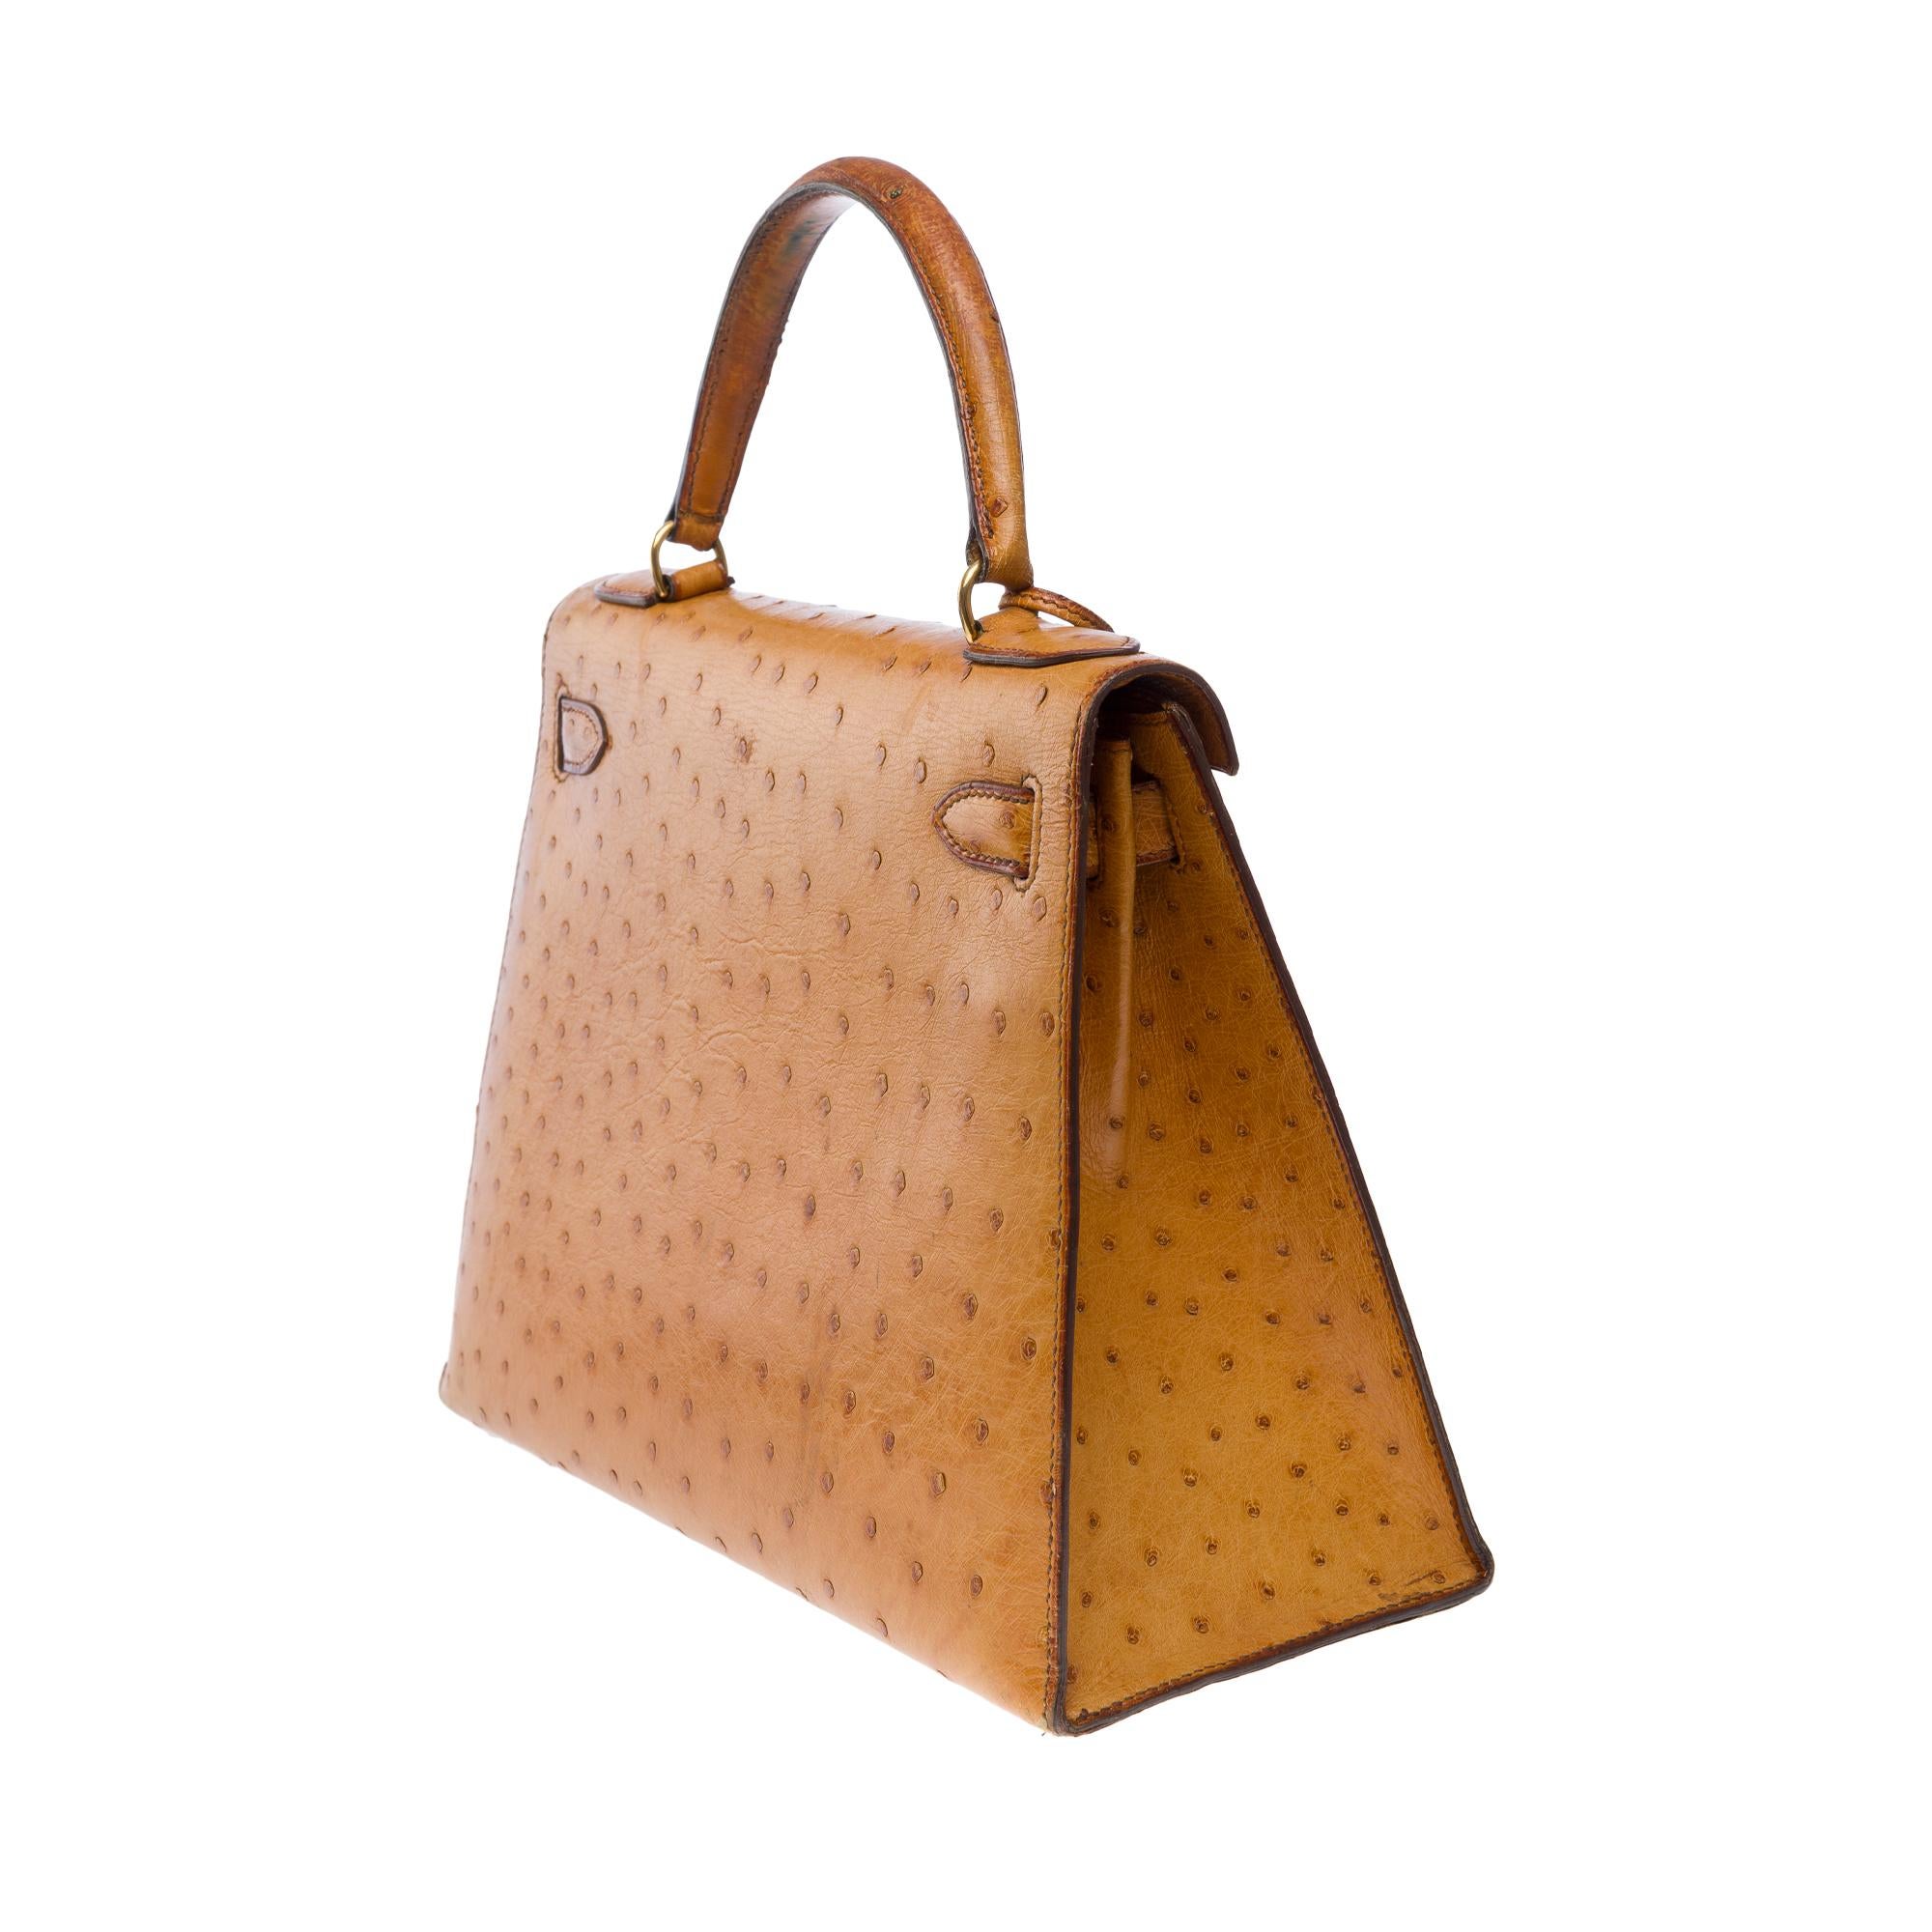 Gorgeous Hermès Kelly 28 sellier handbag in Ostrich Gold leather, GHW 1